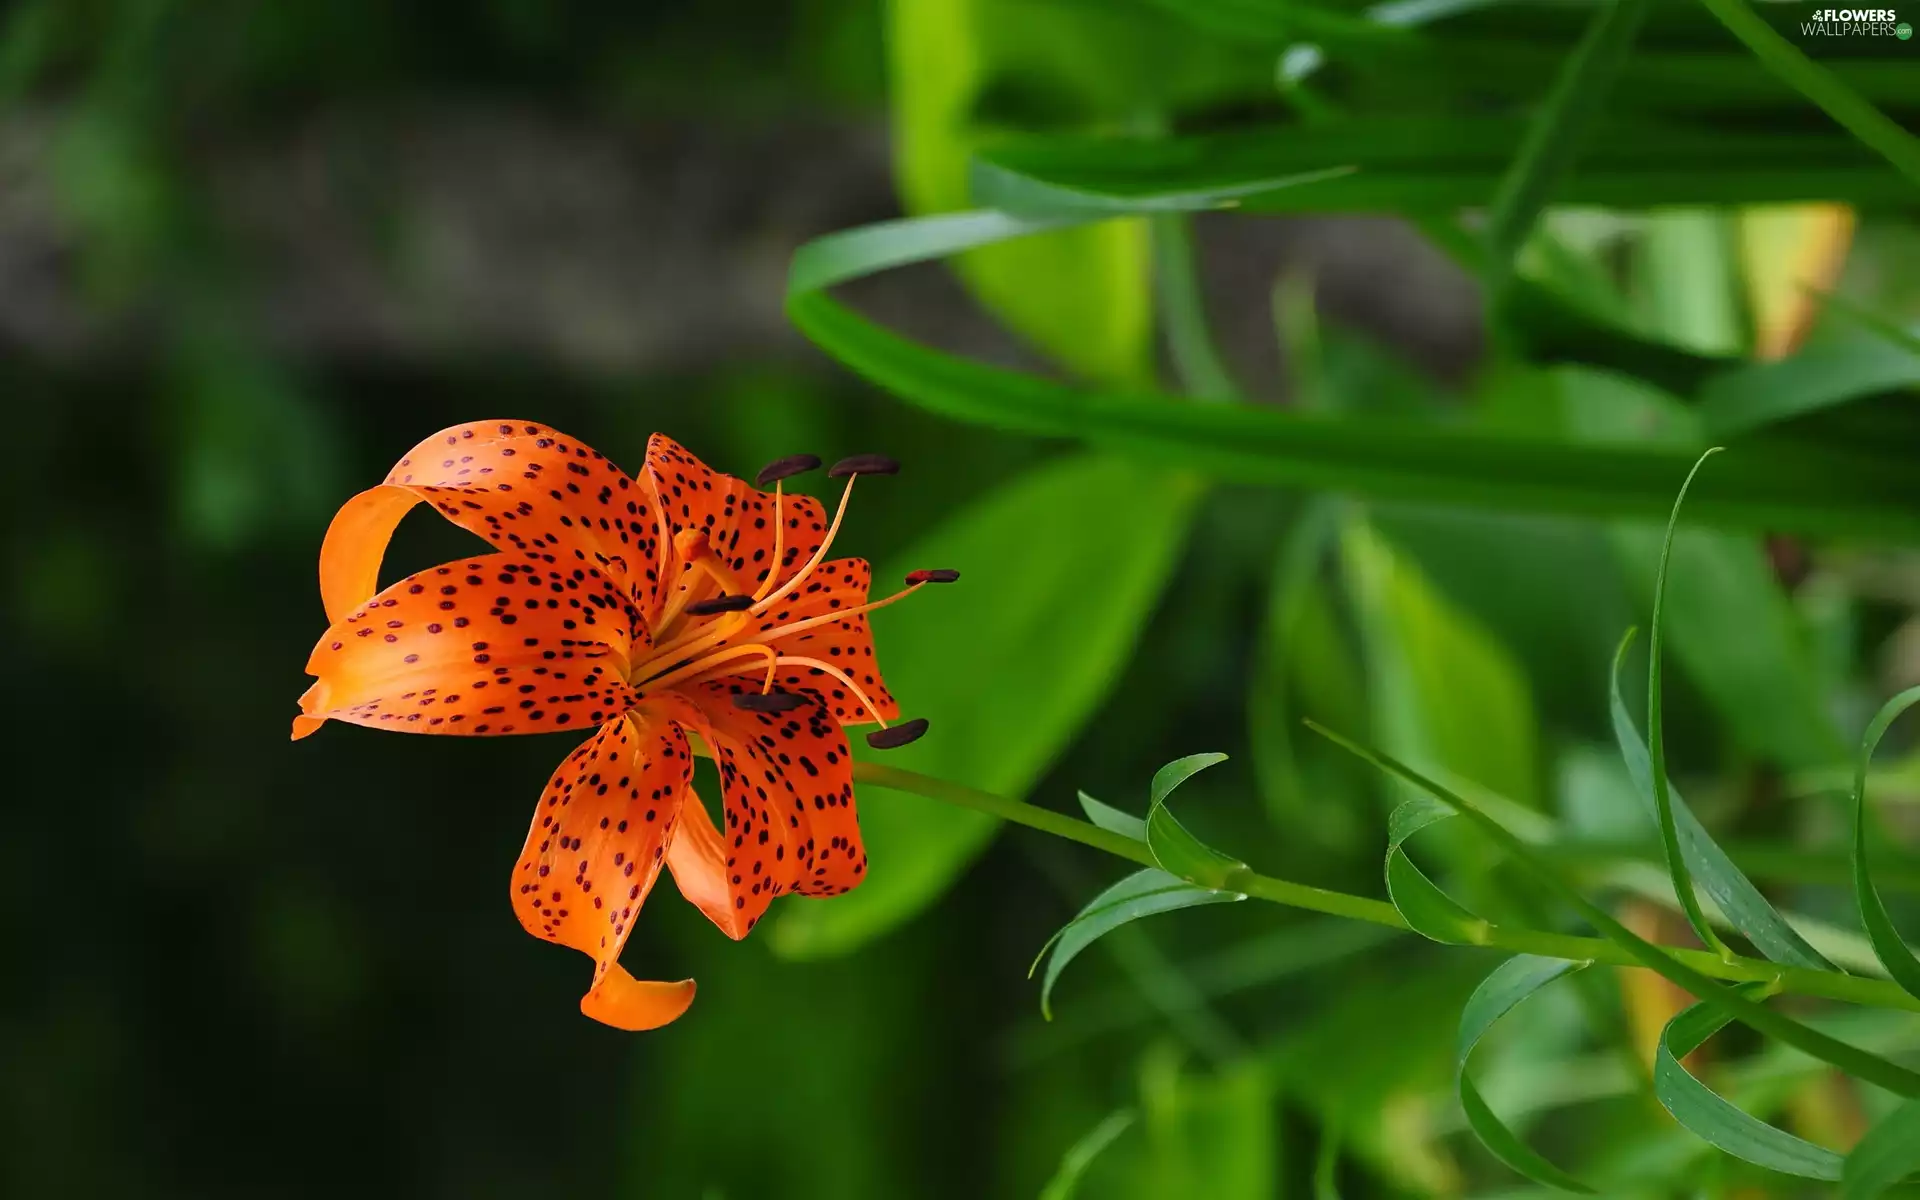 Tiger lily